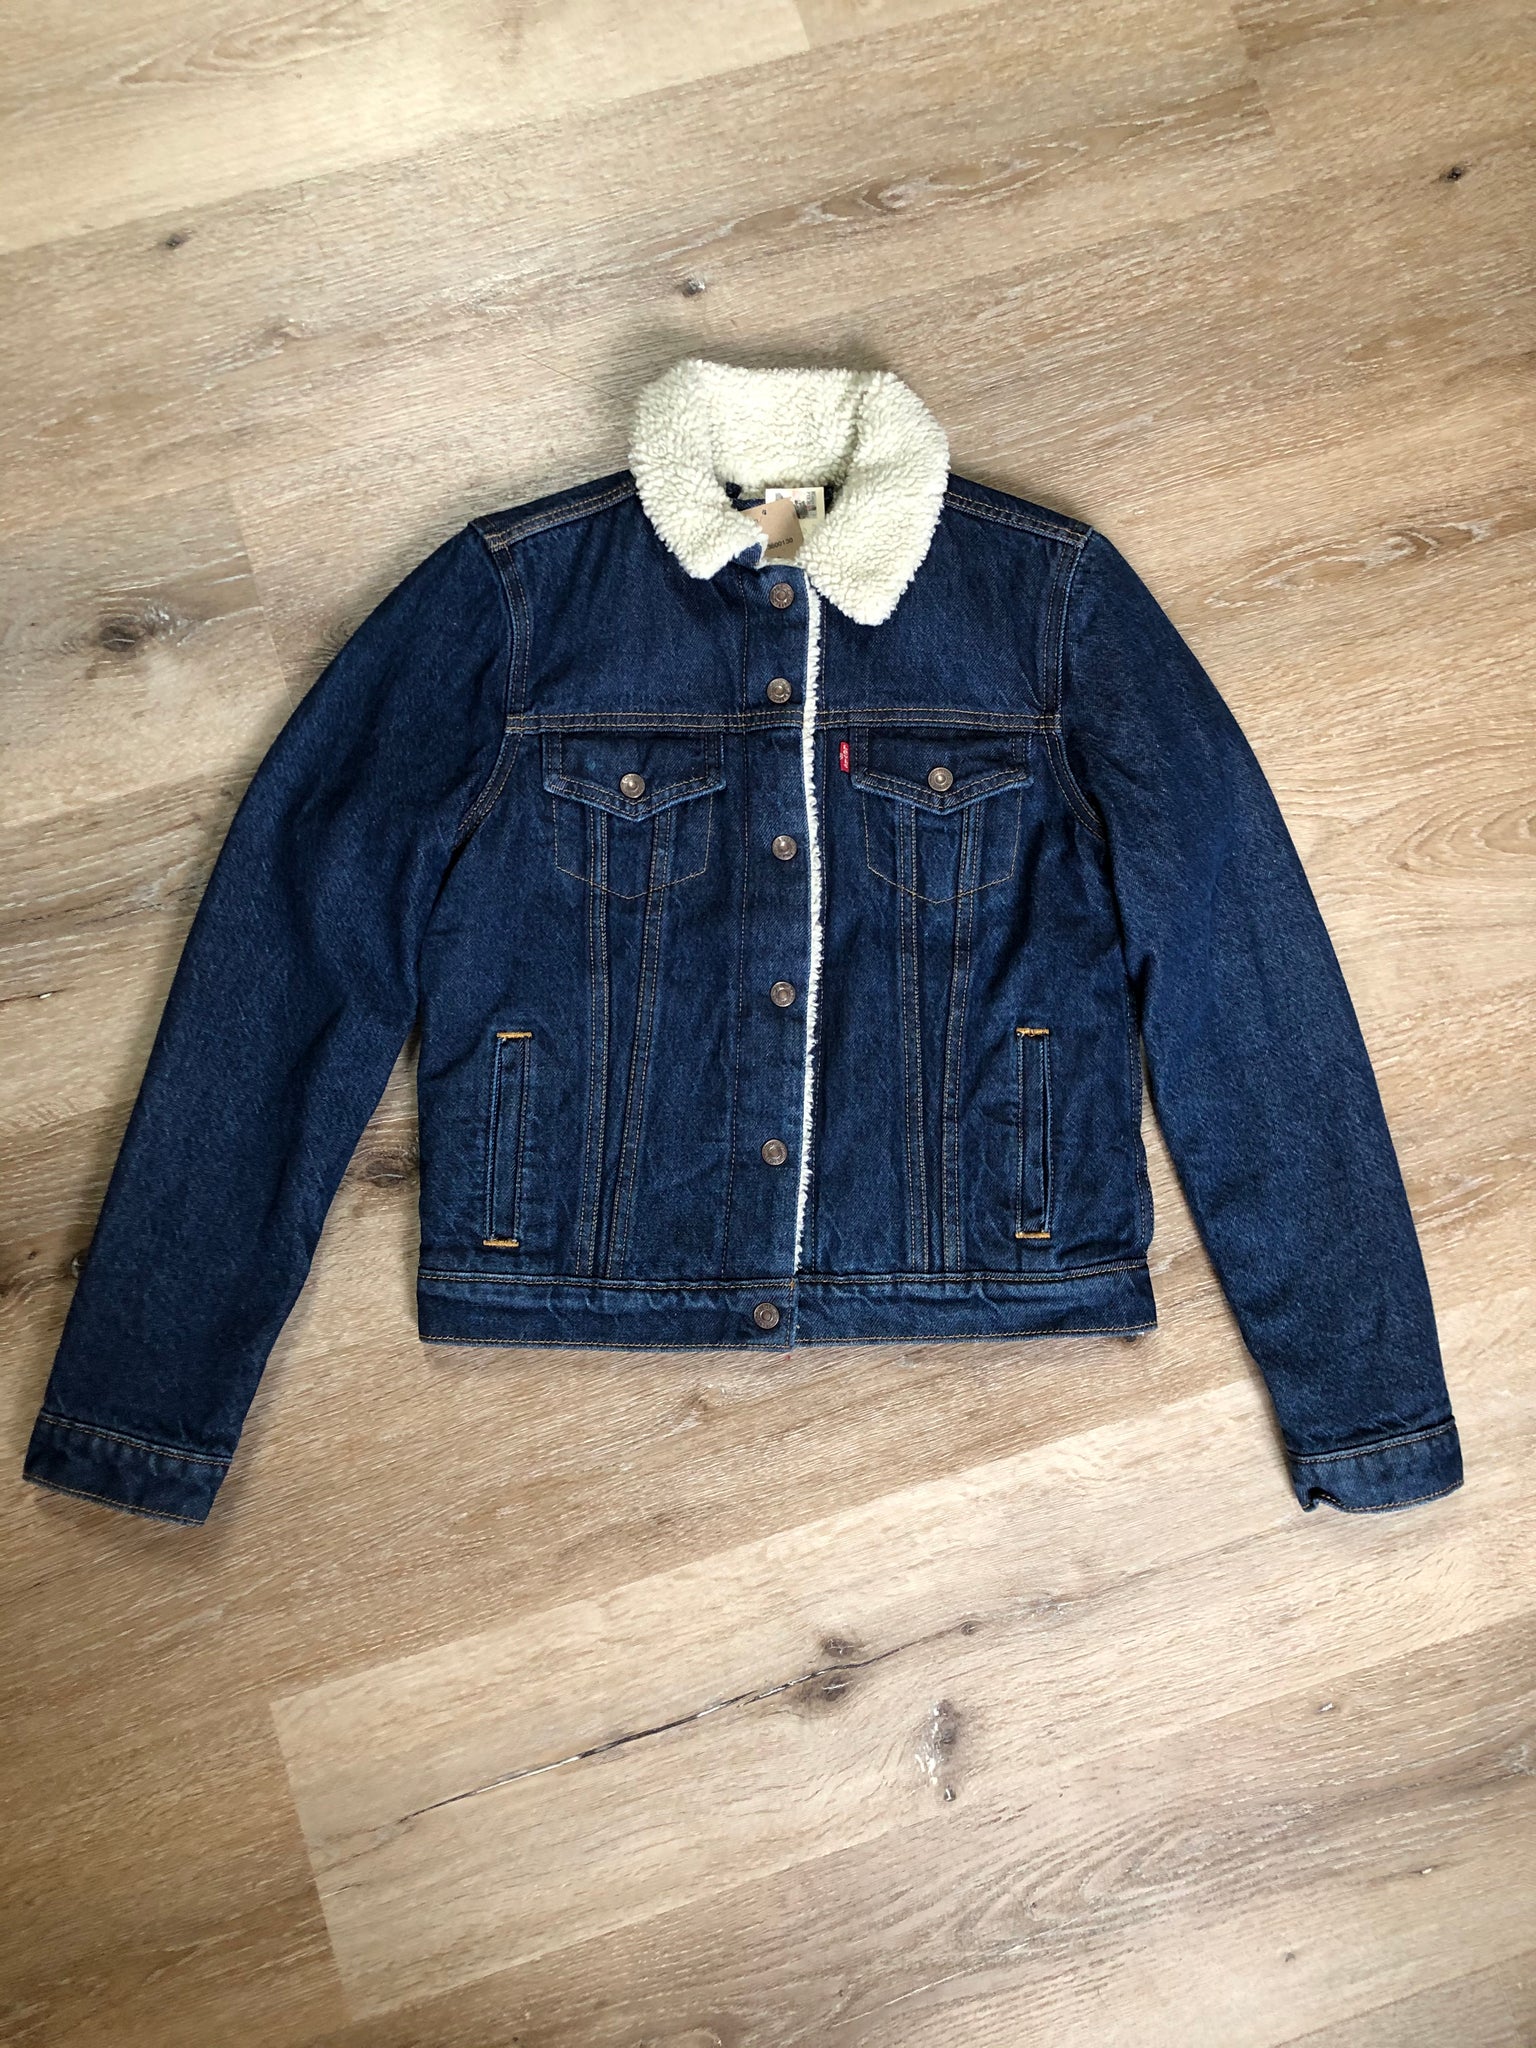 Levi's Medium Wash Denim Sherpa Trucker Jacket, SOLD – KingsPIER vintage